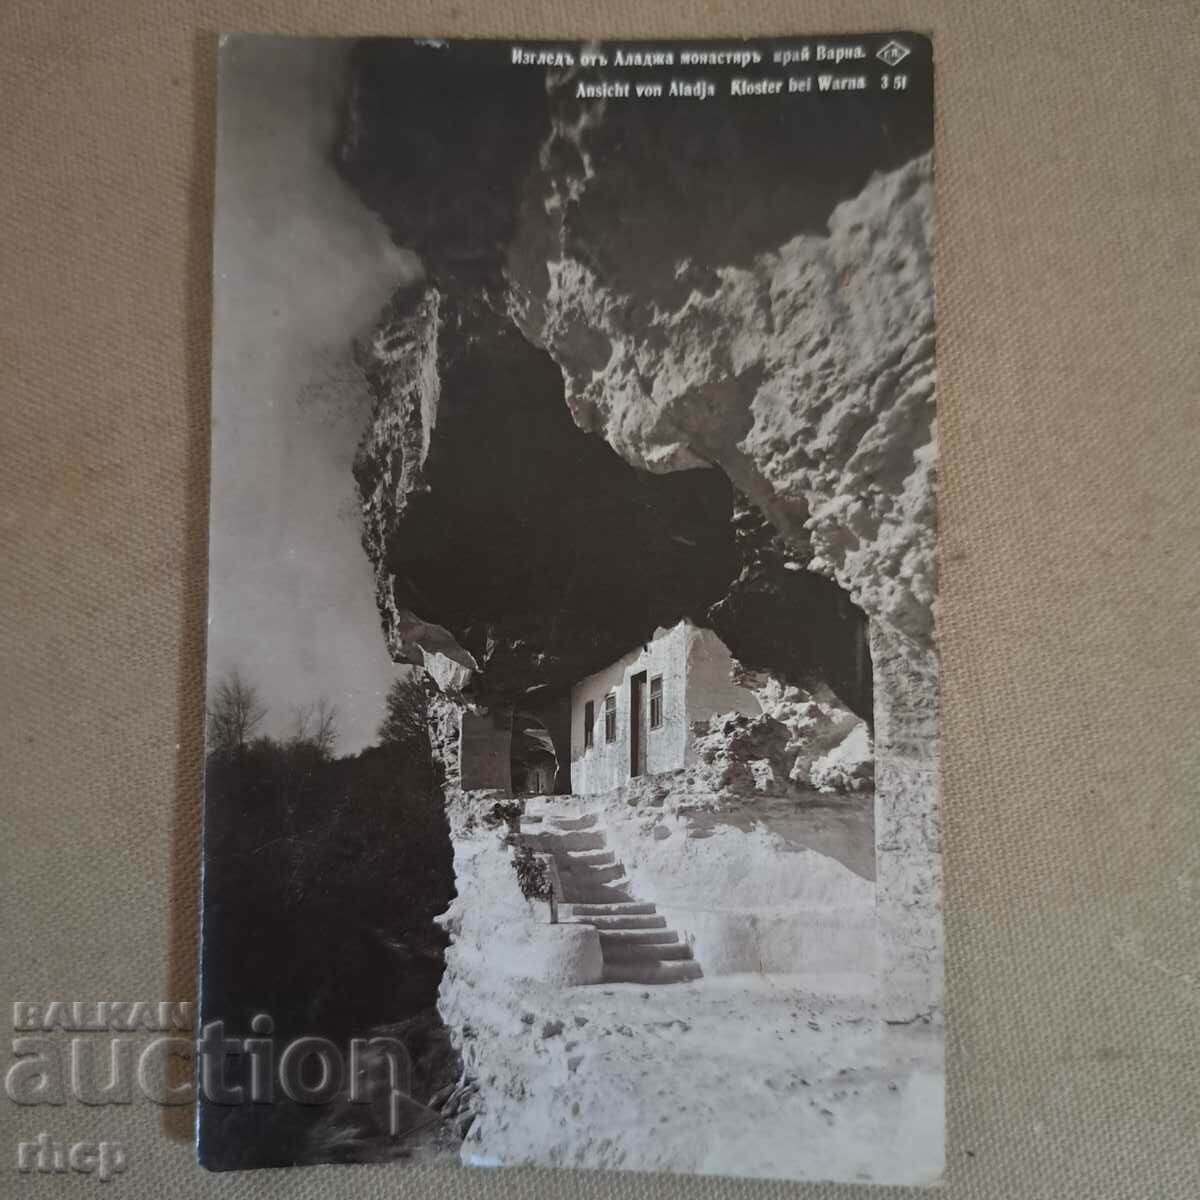 Aladzha Monastery Varna 1933 old photo card Paskov